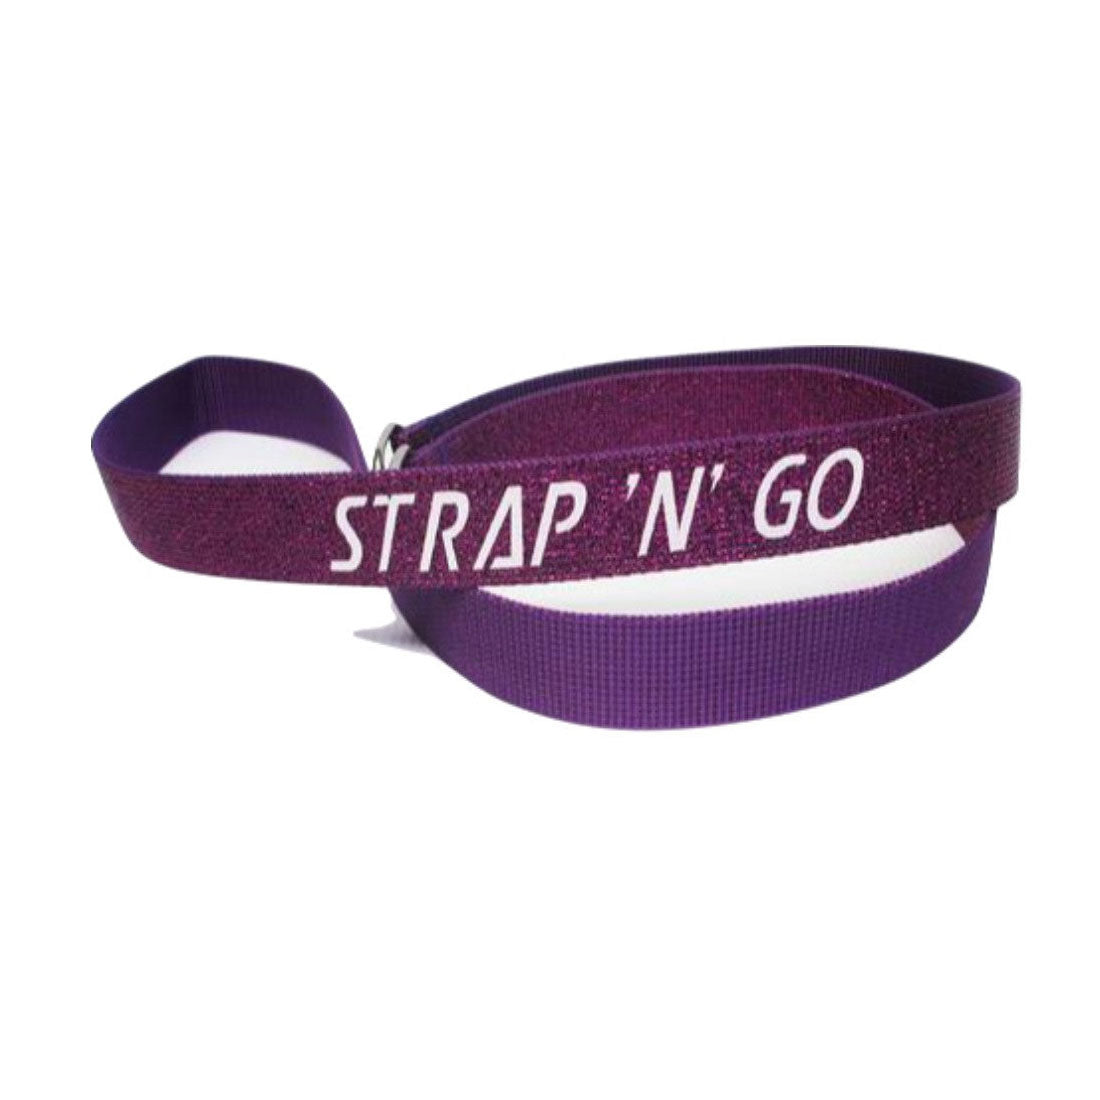 Strap N Go Skate Noose/Leash - Glitter Glitter Purple Roller Skate Accessories